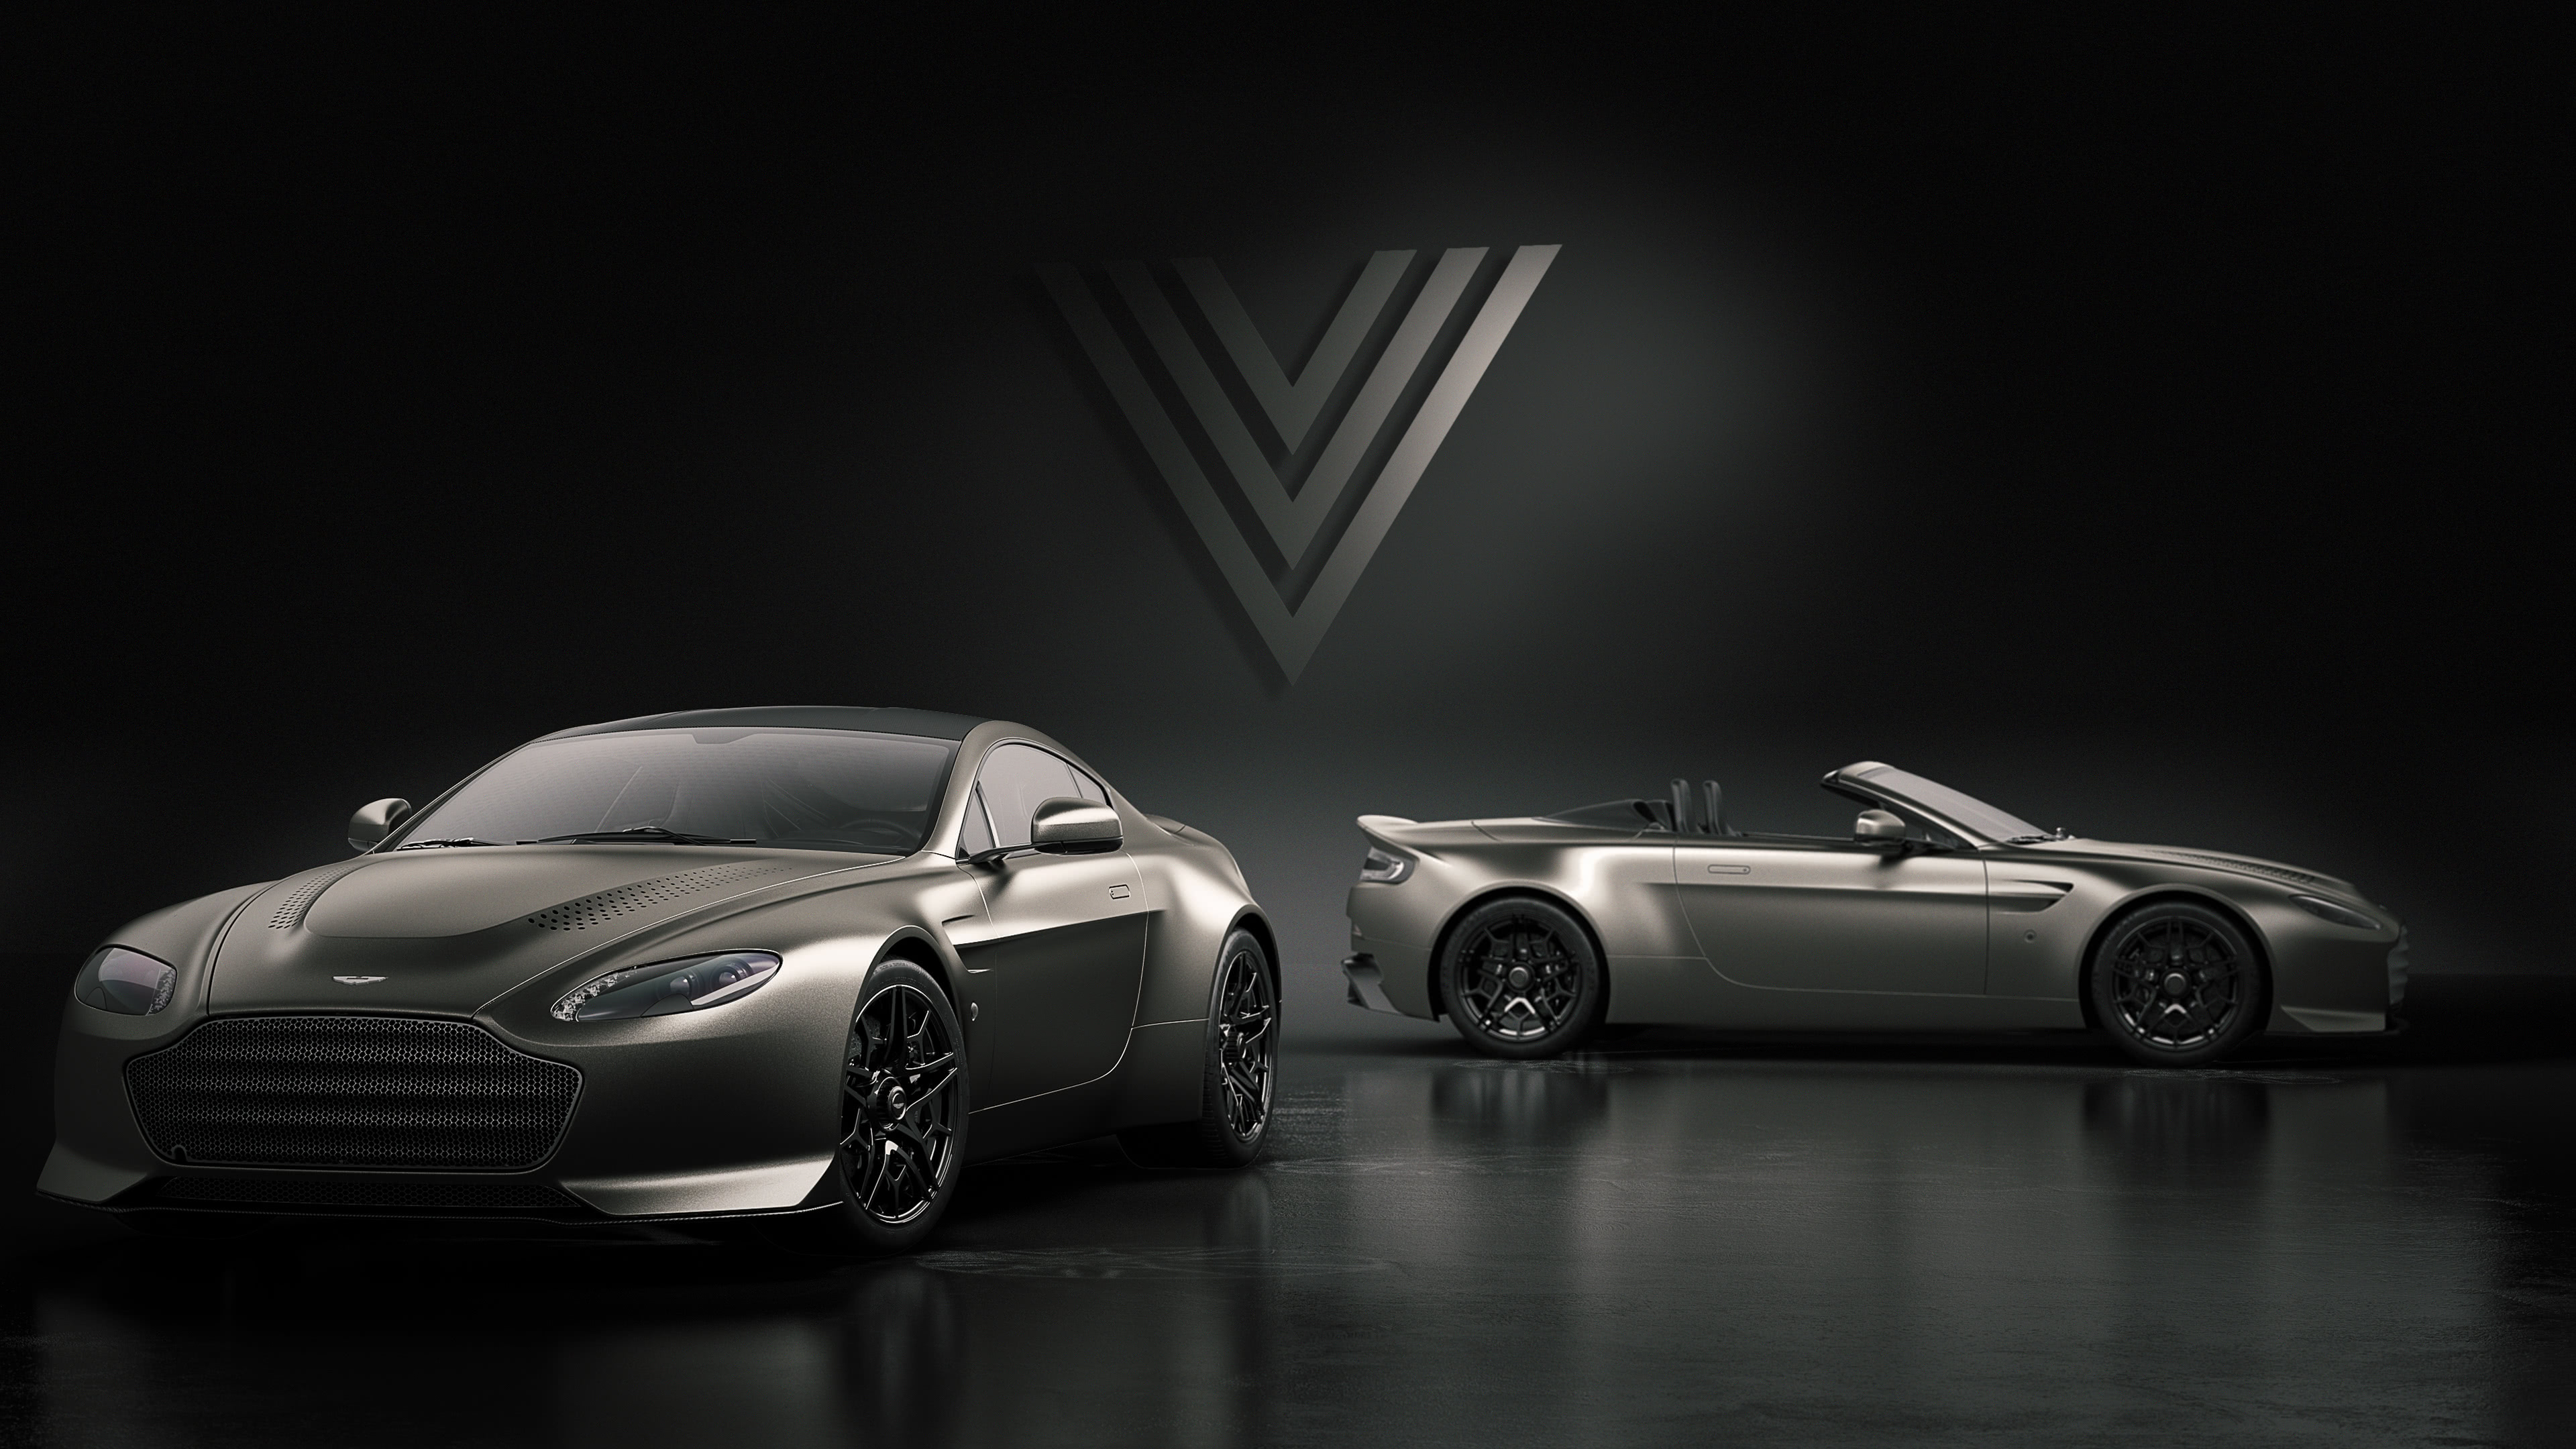 Aston Martin Vantage, Auto luxury, Powerful performance, Exquisite design, 3840x2160 4K Desktop